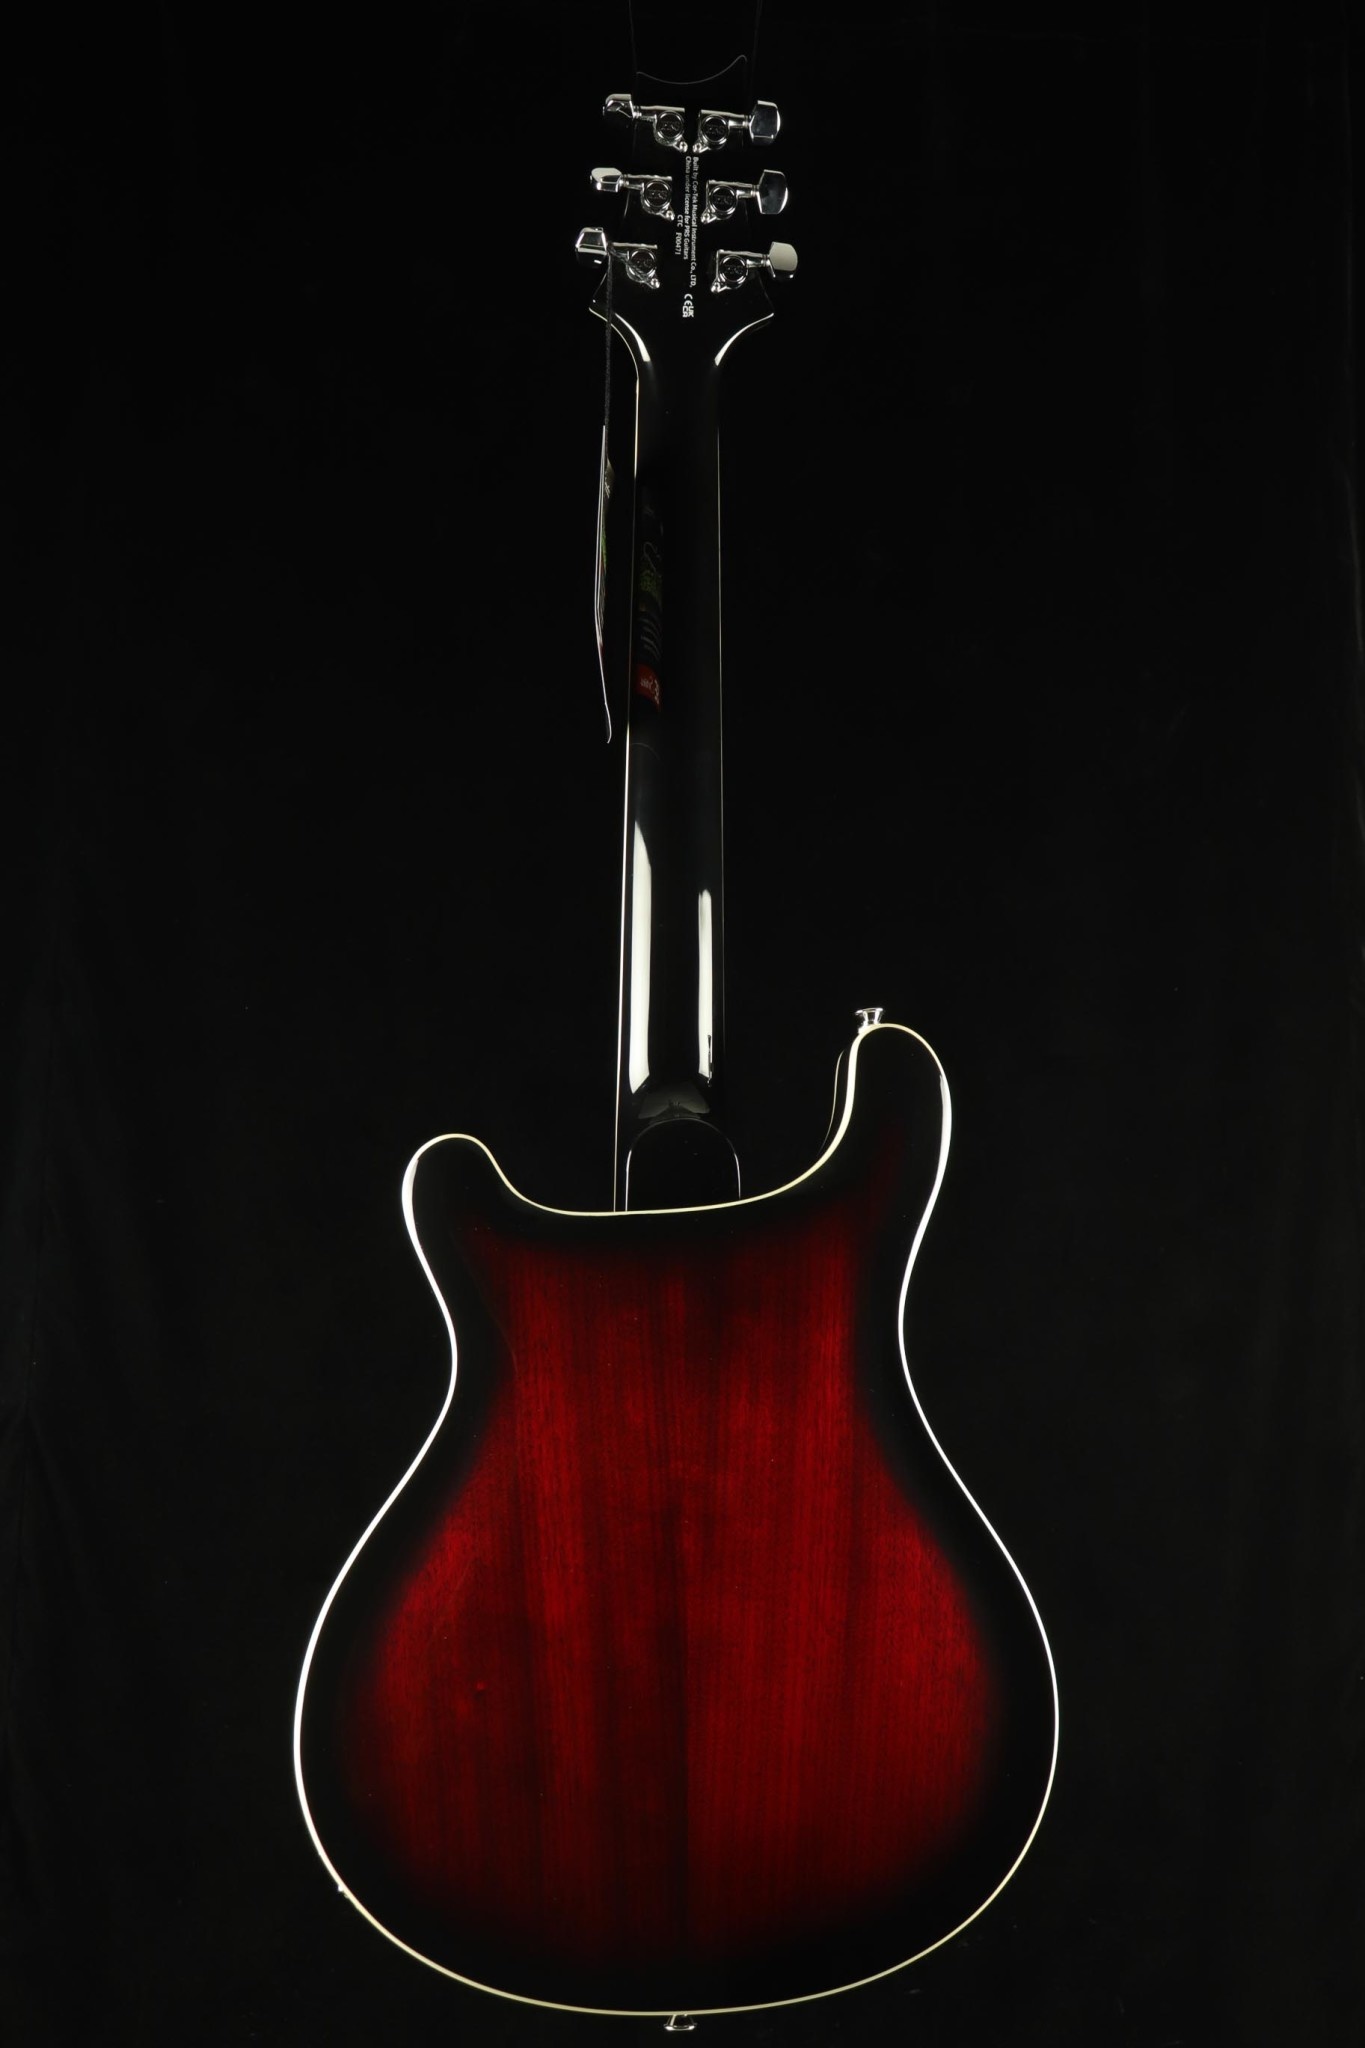 PRS Guitars PRS SE Hollowbody Standard - Fire Red Burst